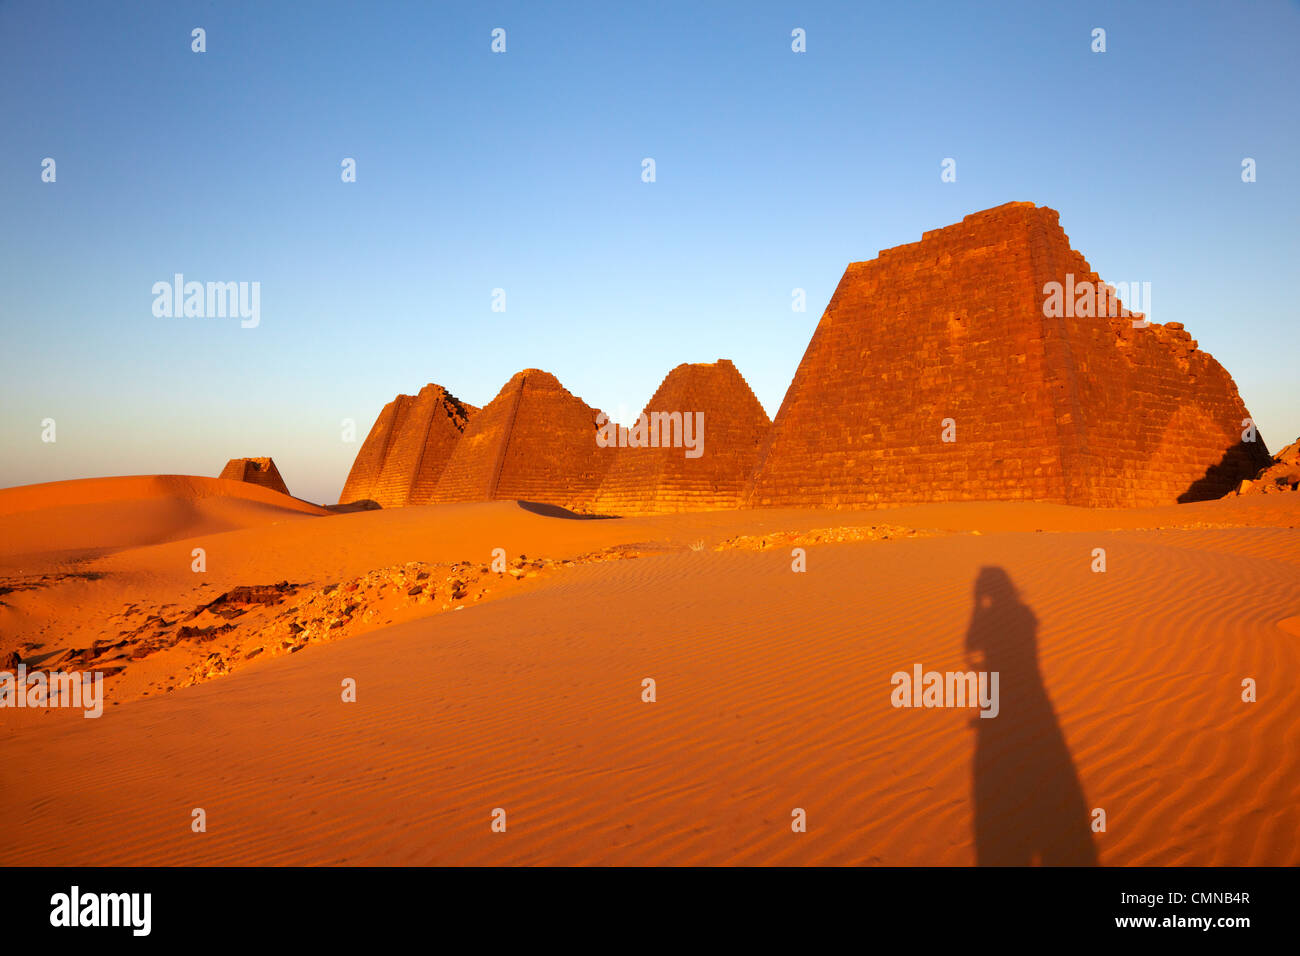 The Pyramids of Meroe, Northern Sudan, Africa Stock Photo